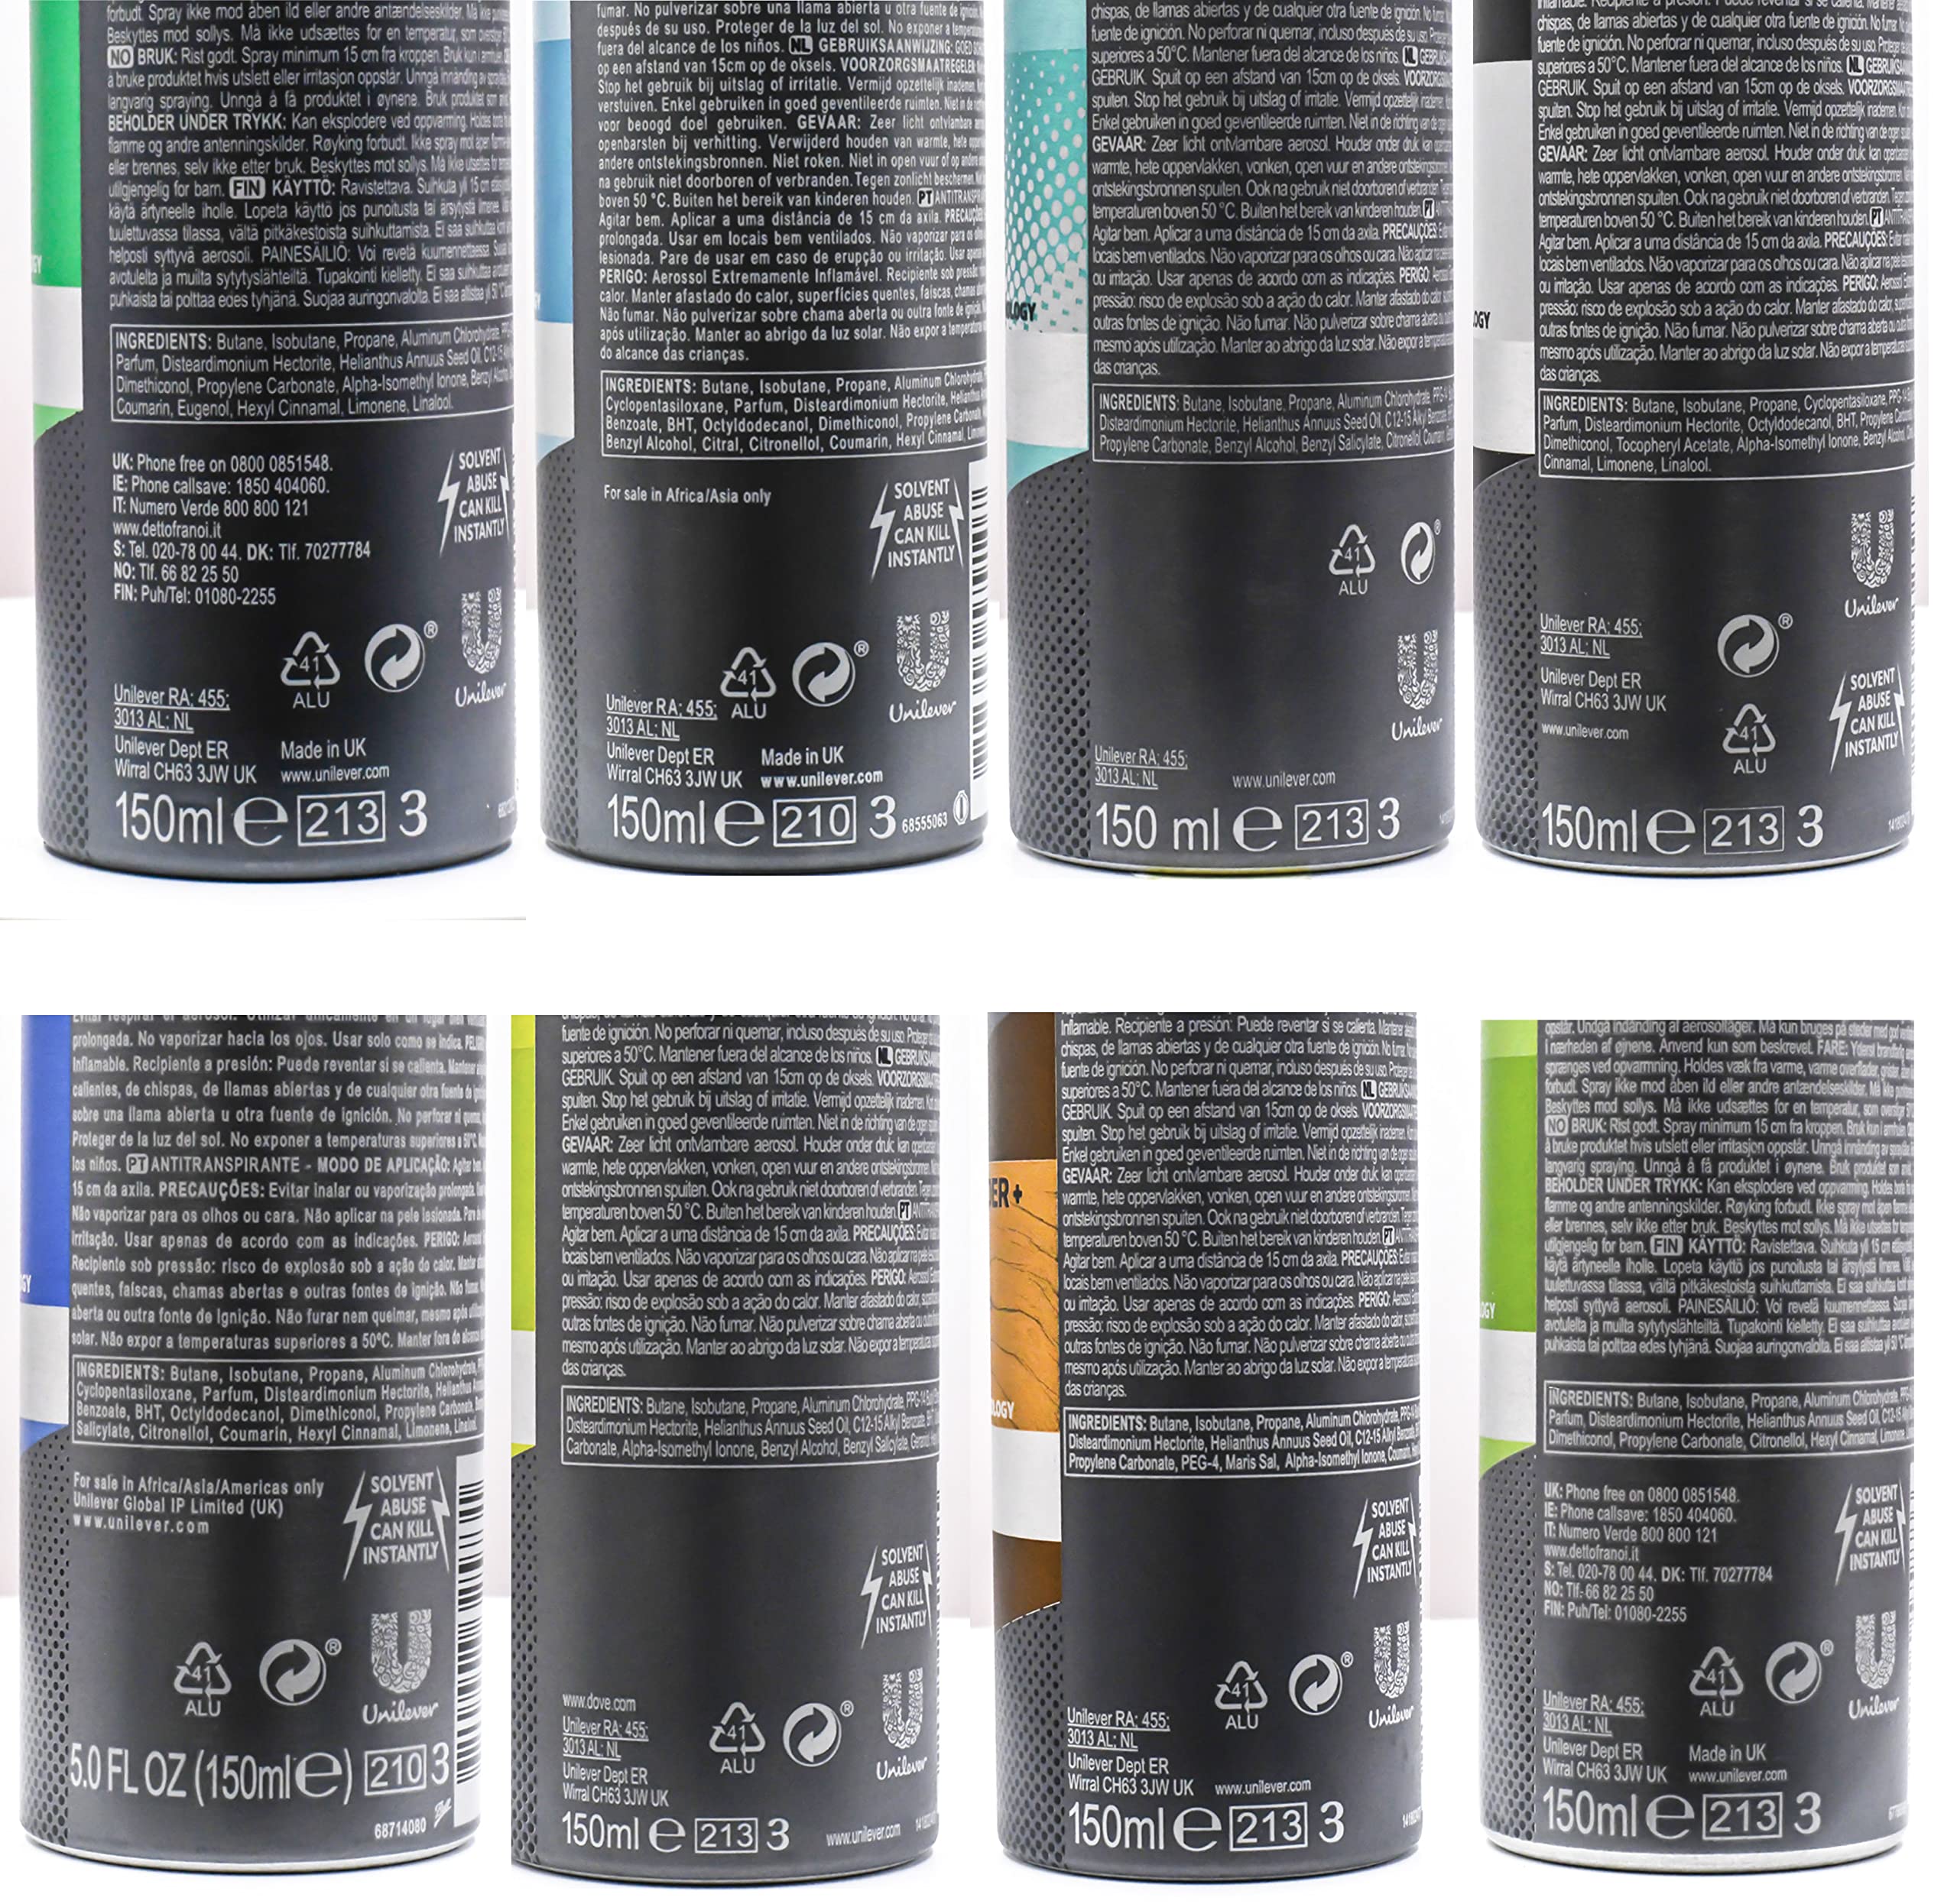 Dove Men+ Care Dry Spray Antiperspirant Deodorant 150 ML Pack of 6 Mixed Scents 5 Fl Oz (Pack of 6) 30 Fl Oz